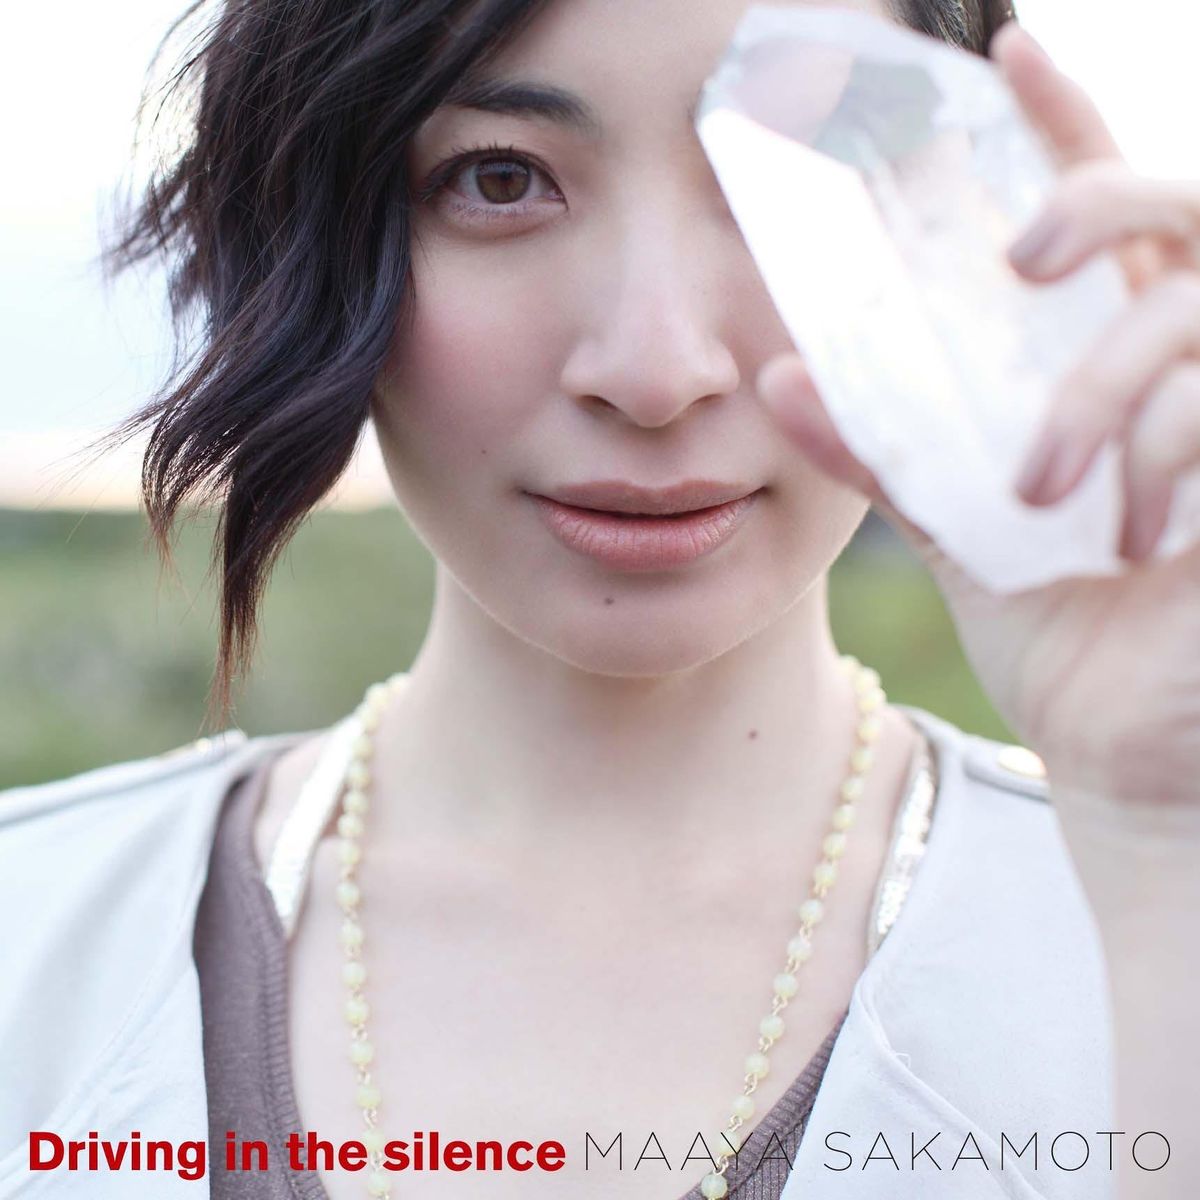 Maaya Sakamoto Driving in the Silence cover artwork